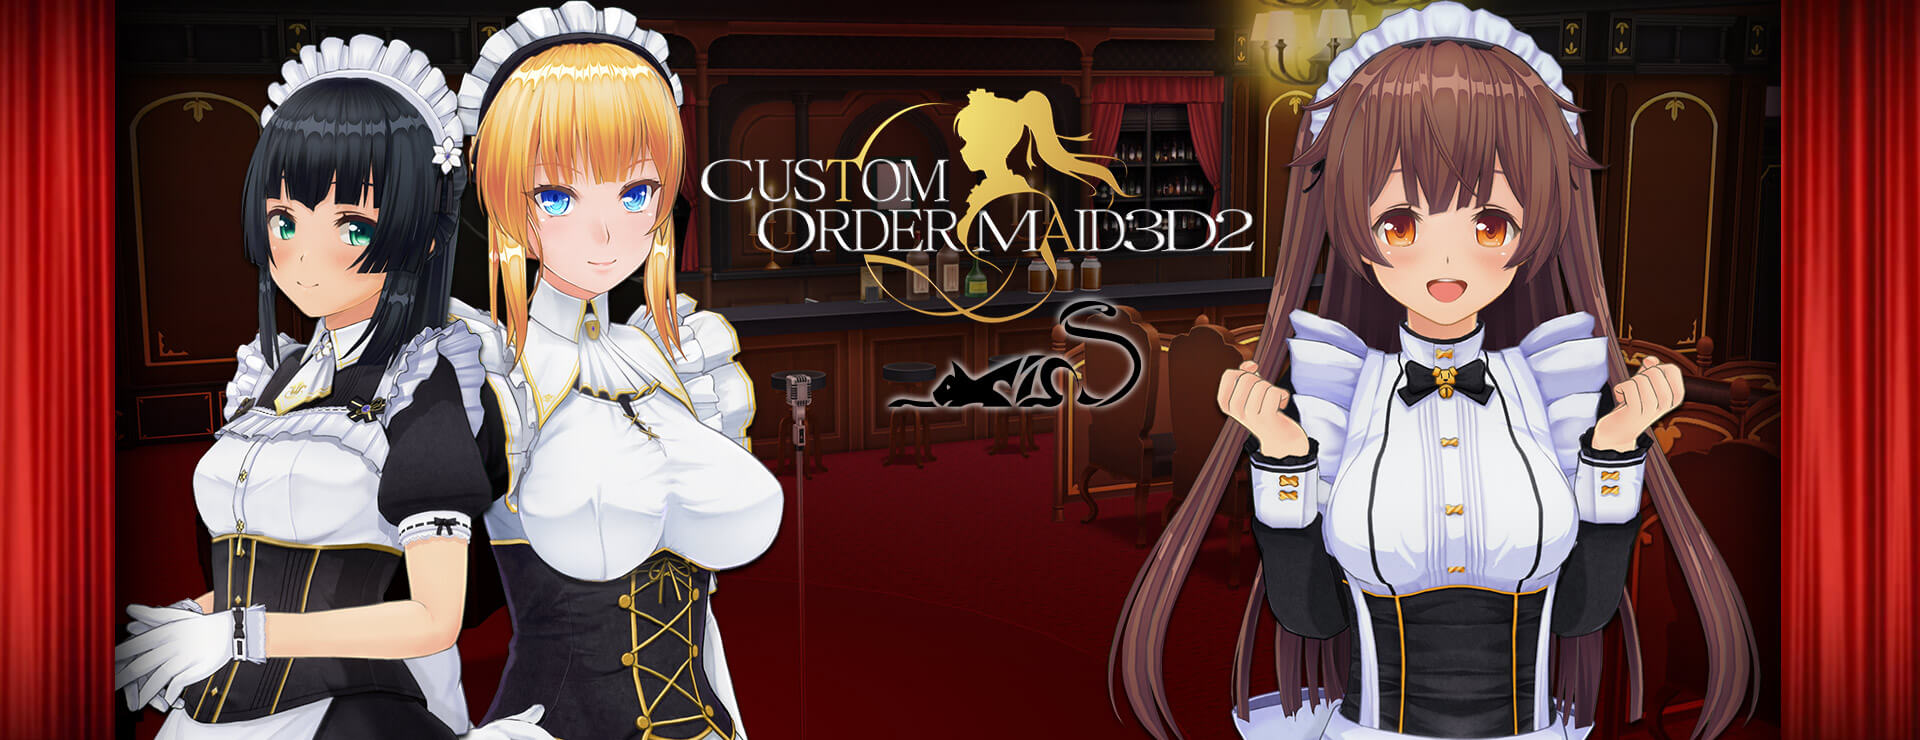 Custom Order Maid 3D2 Game - Simulation Juego